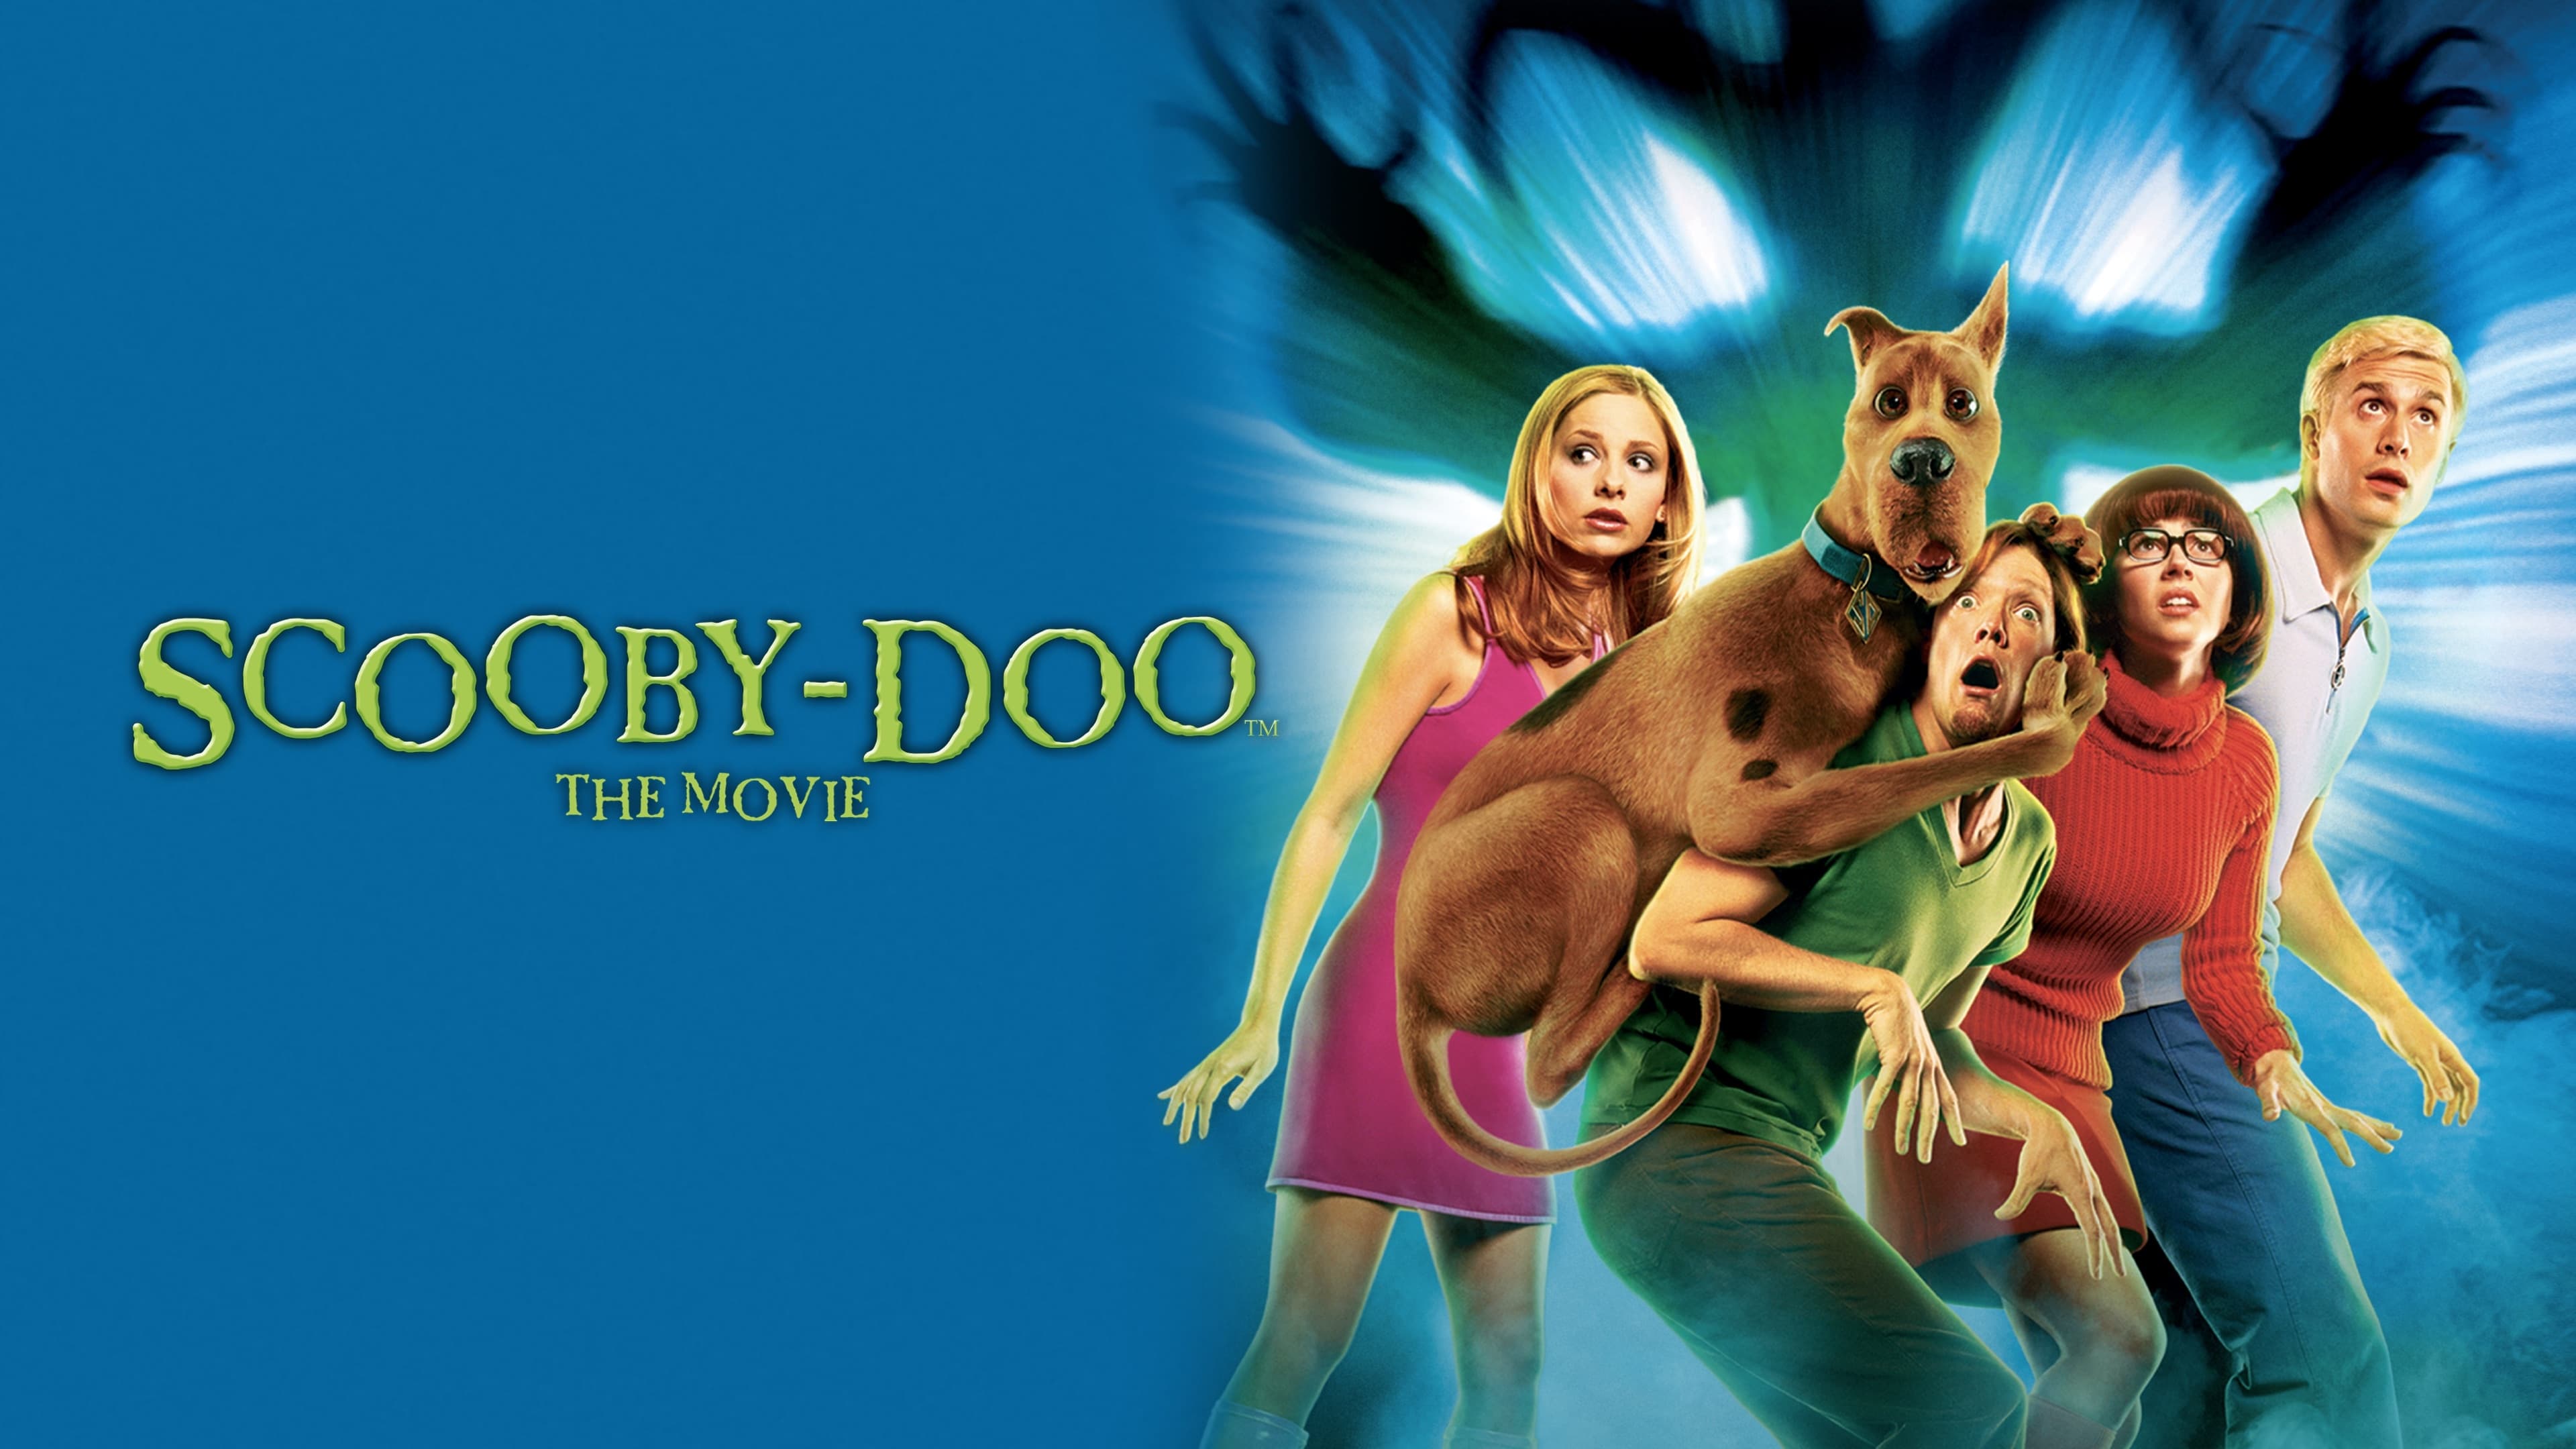 Scooby-Doo - A nagy csapat